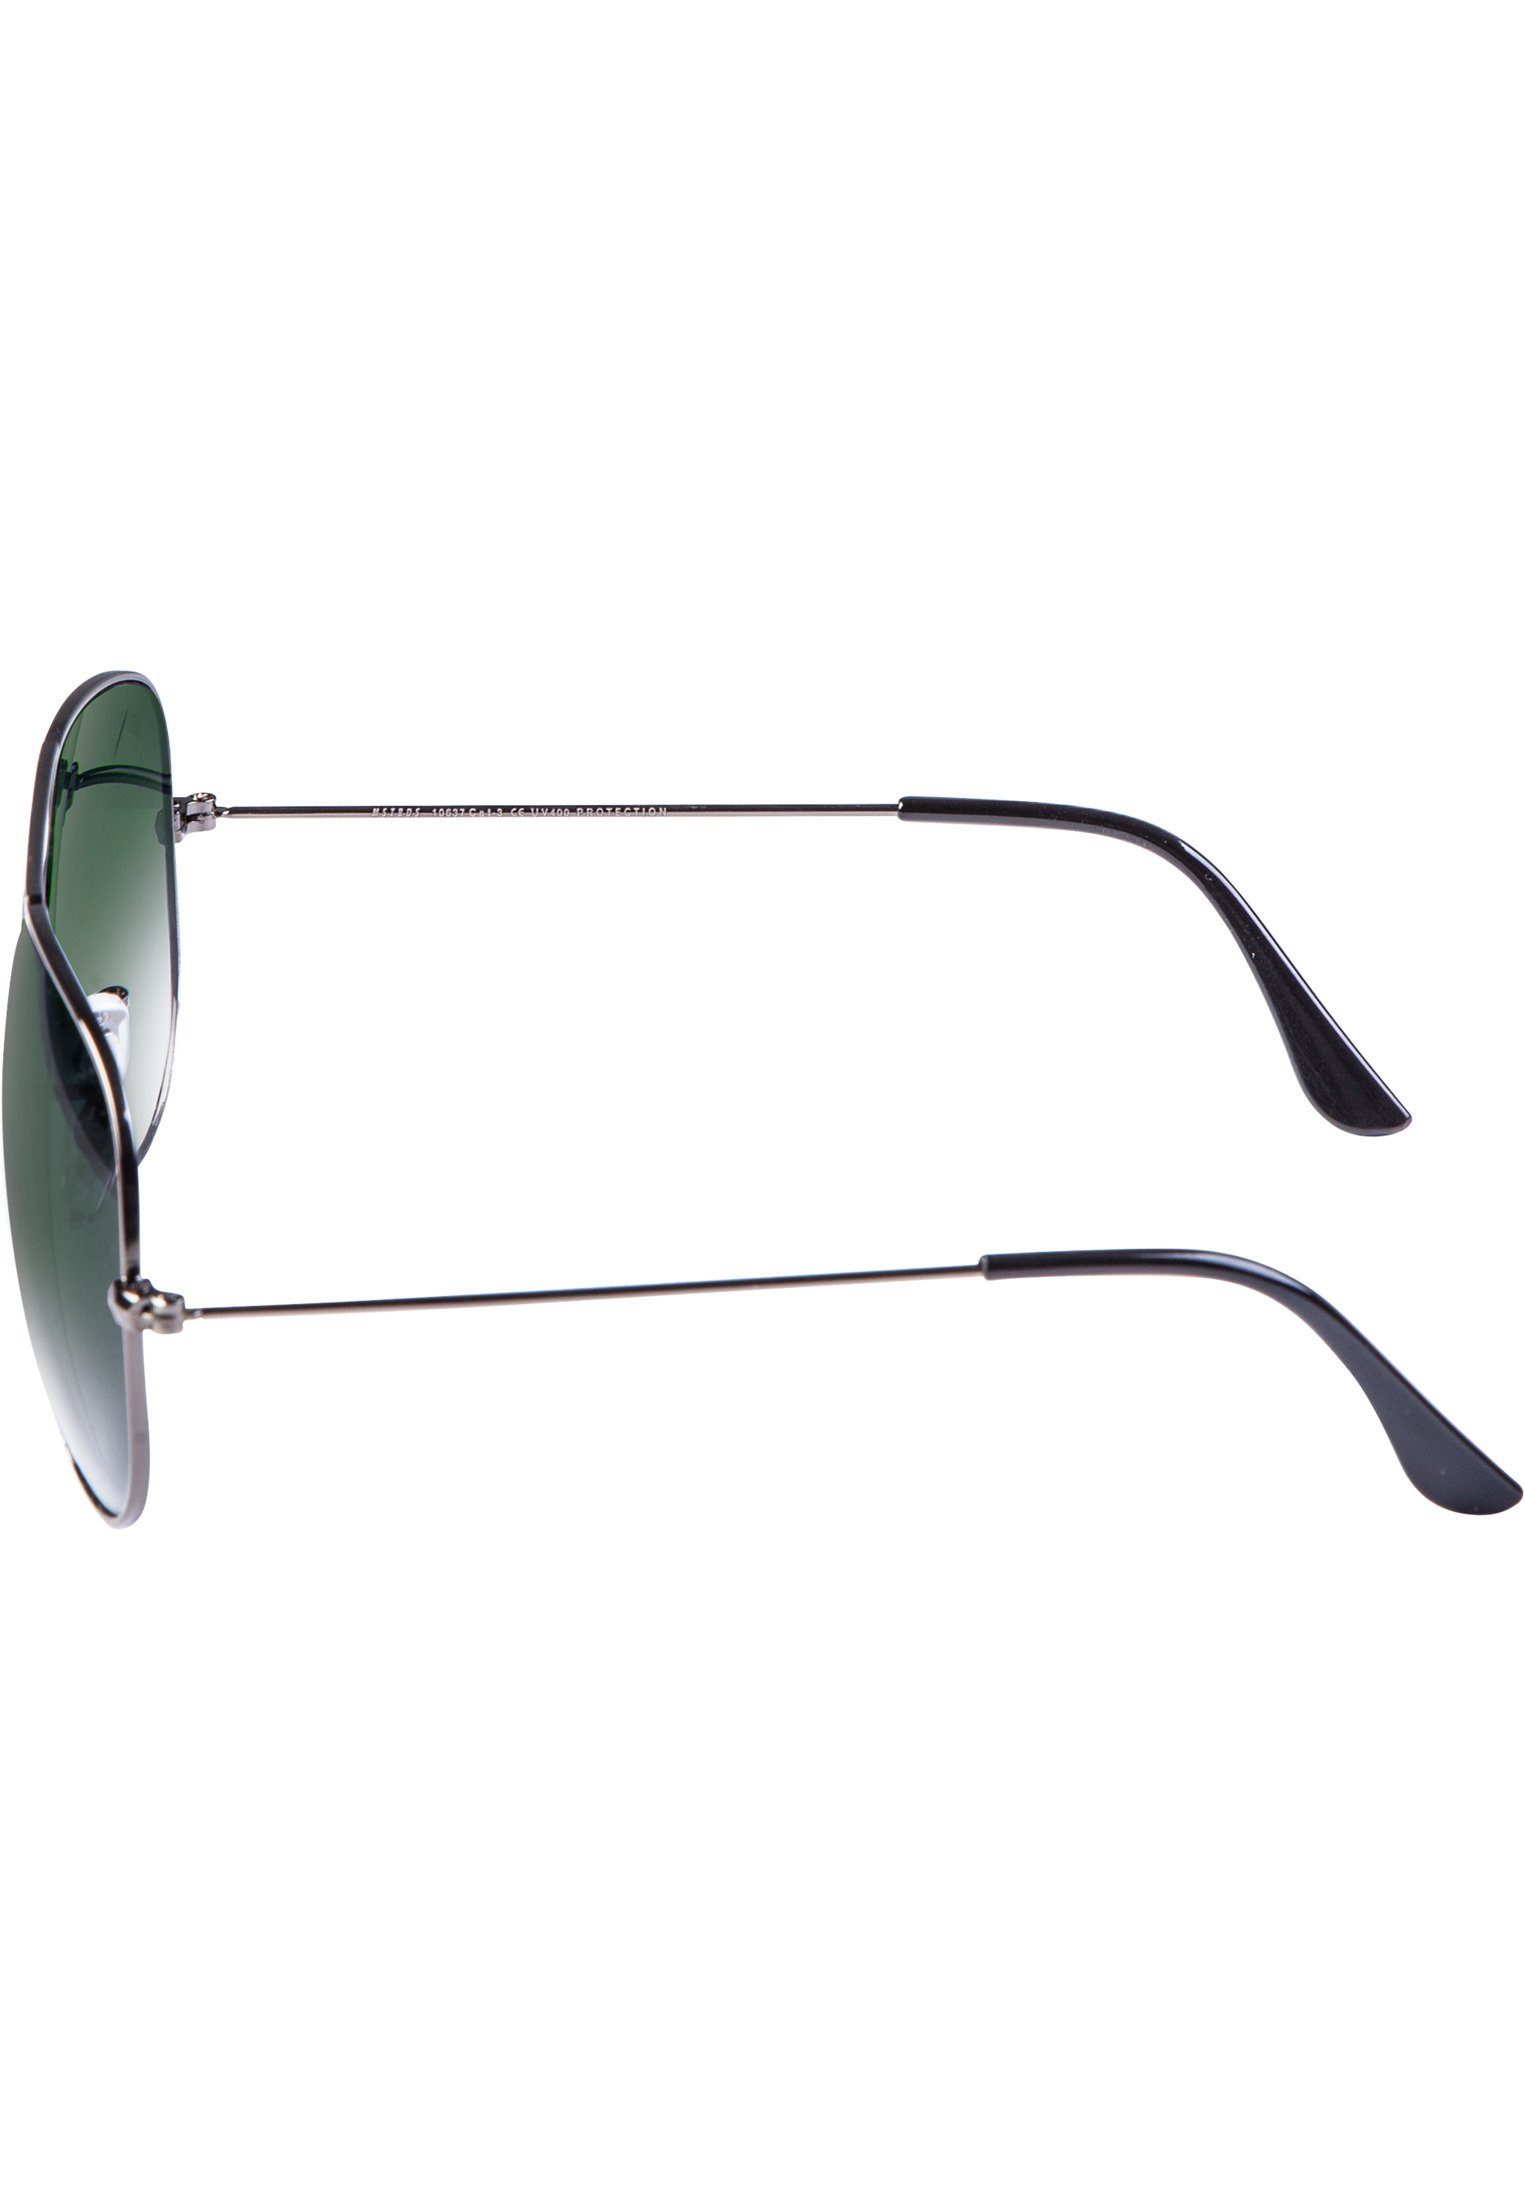 Youth Sonnenbrille PureAv Accessoires gun/green MSTRDS Sunglasses